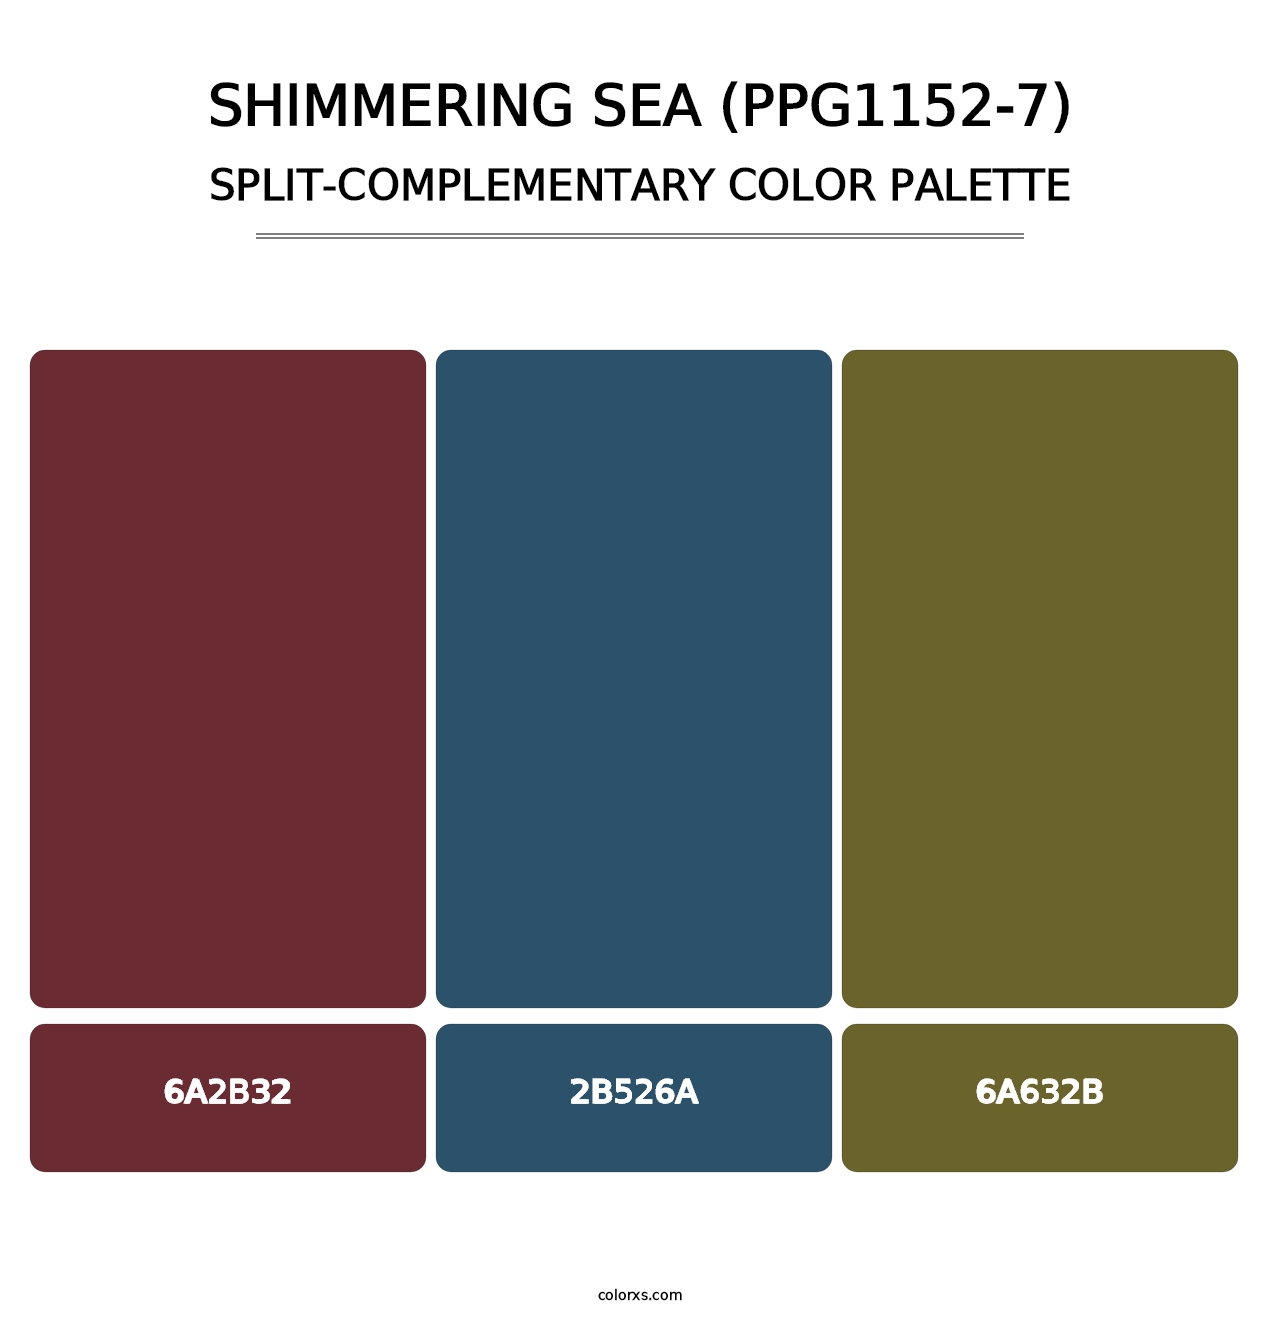 Shimmering Sea (PPG1152-7) - Split-Complementary Color Palette